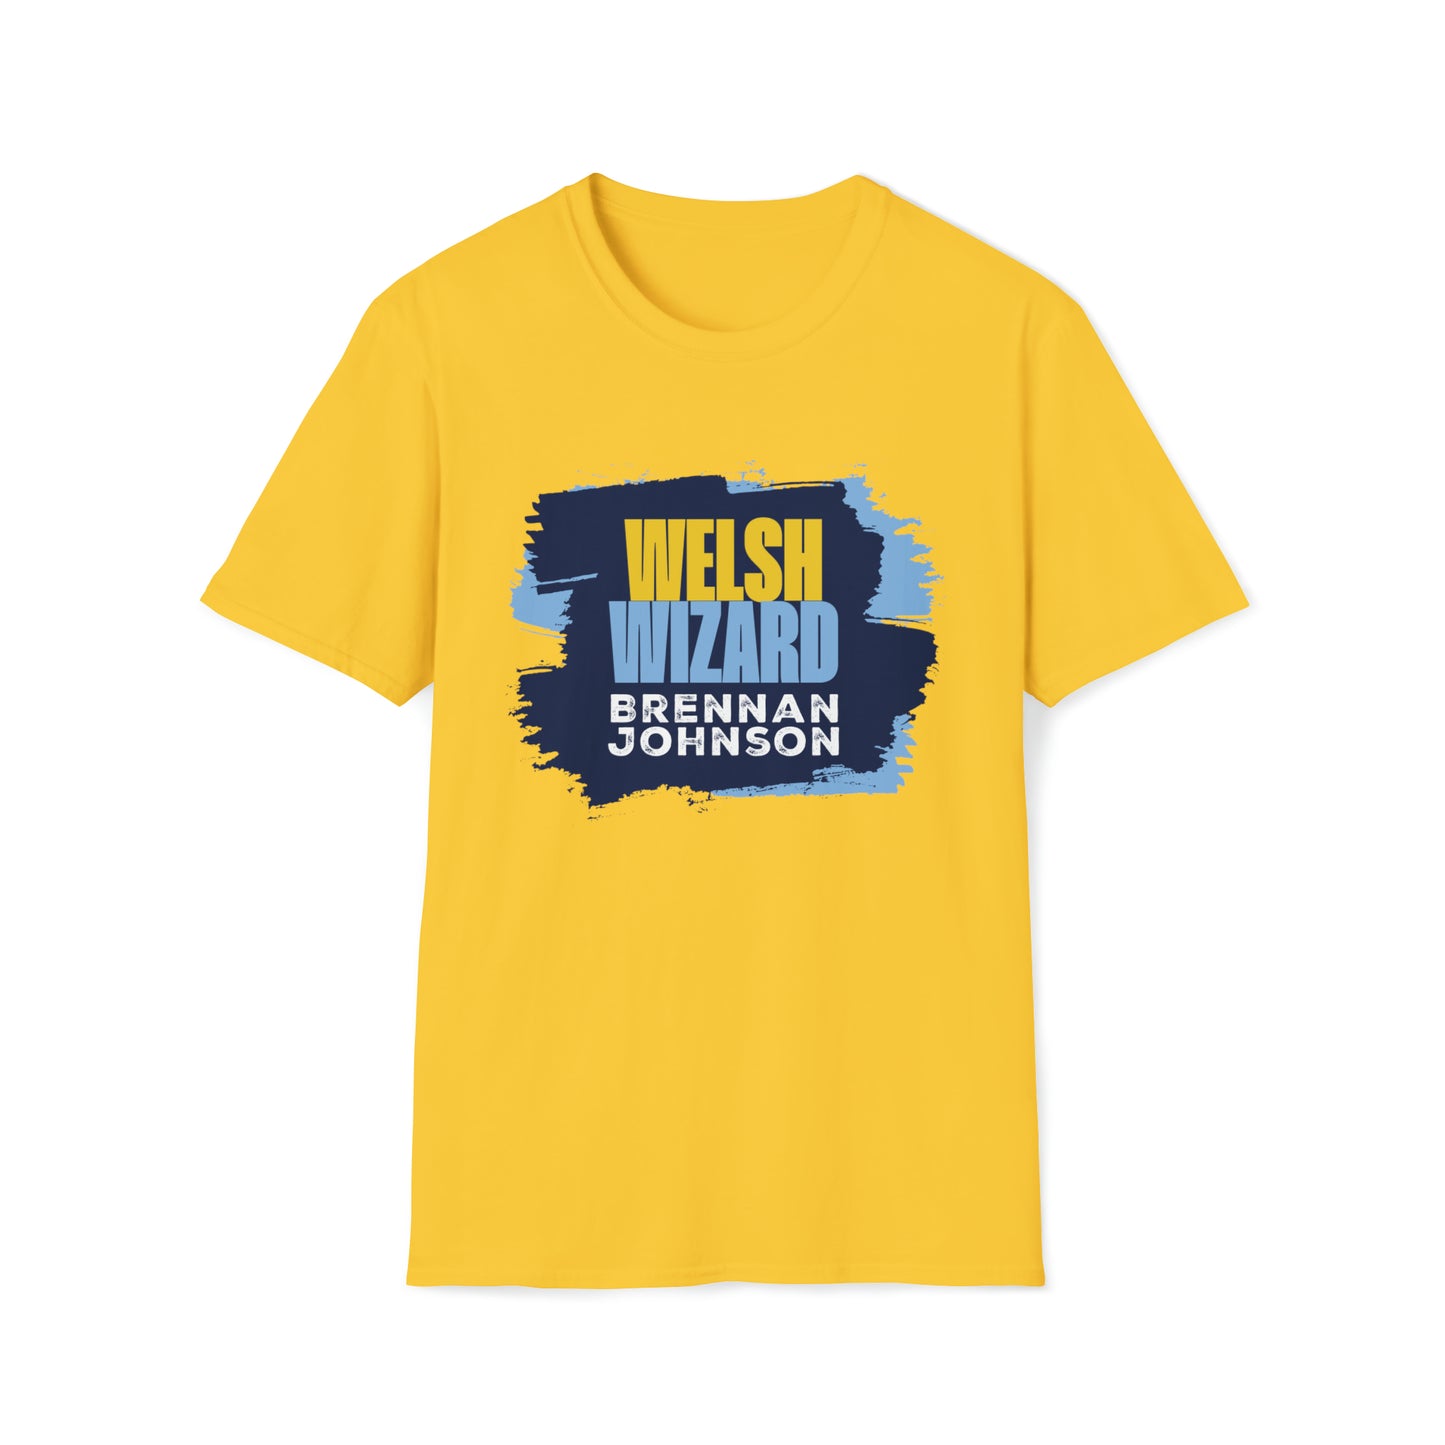 WATTV Brennan Johnson Welsh Wizard T-Shirt